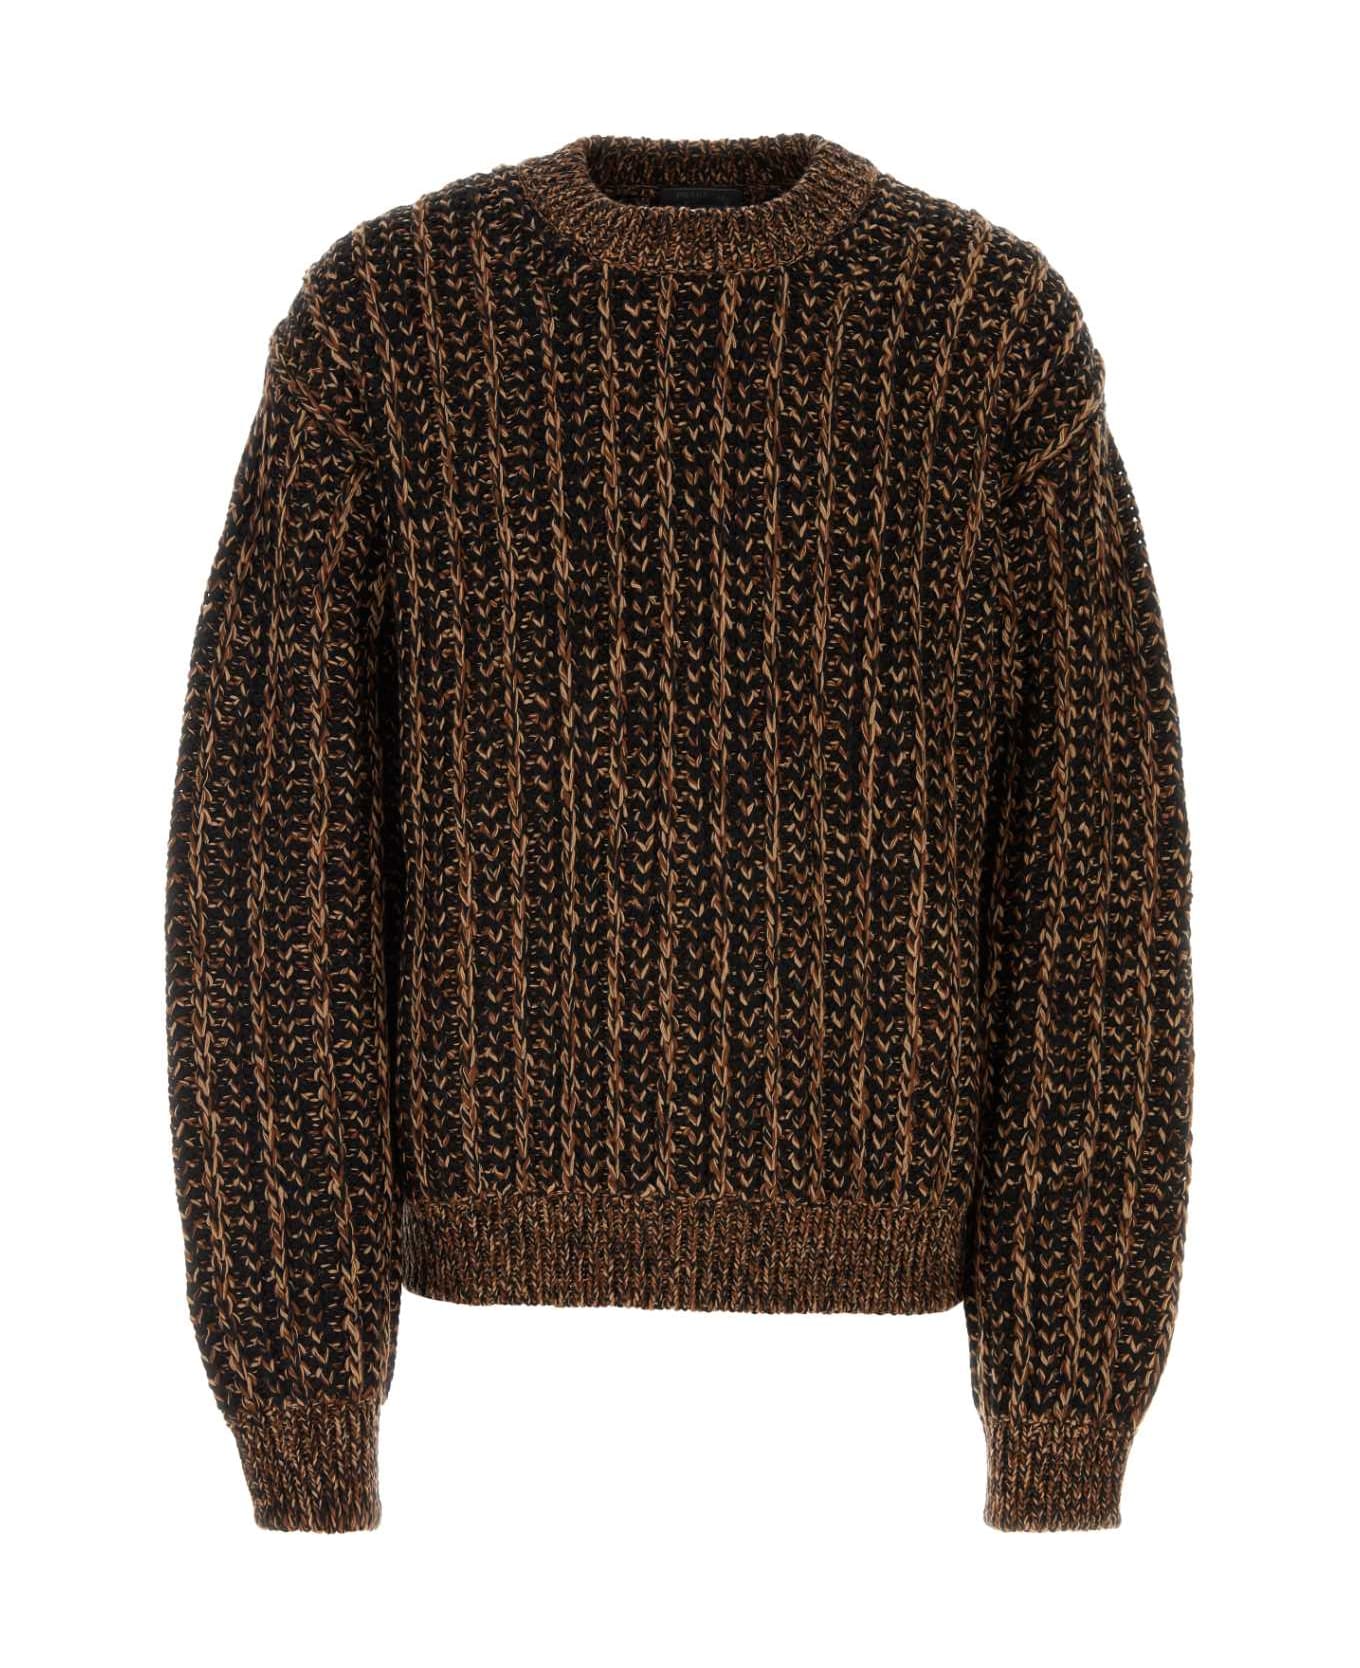 Prada Multicolor Wool Blend Sweater - CAMMELLO